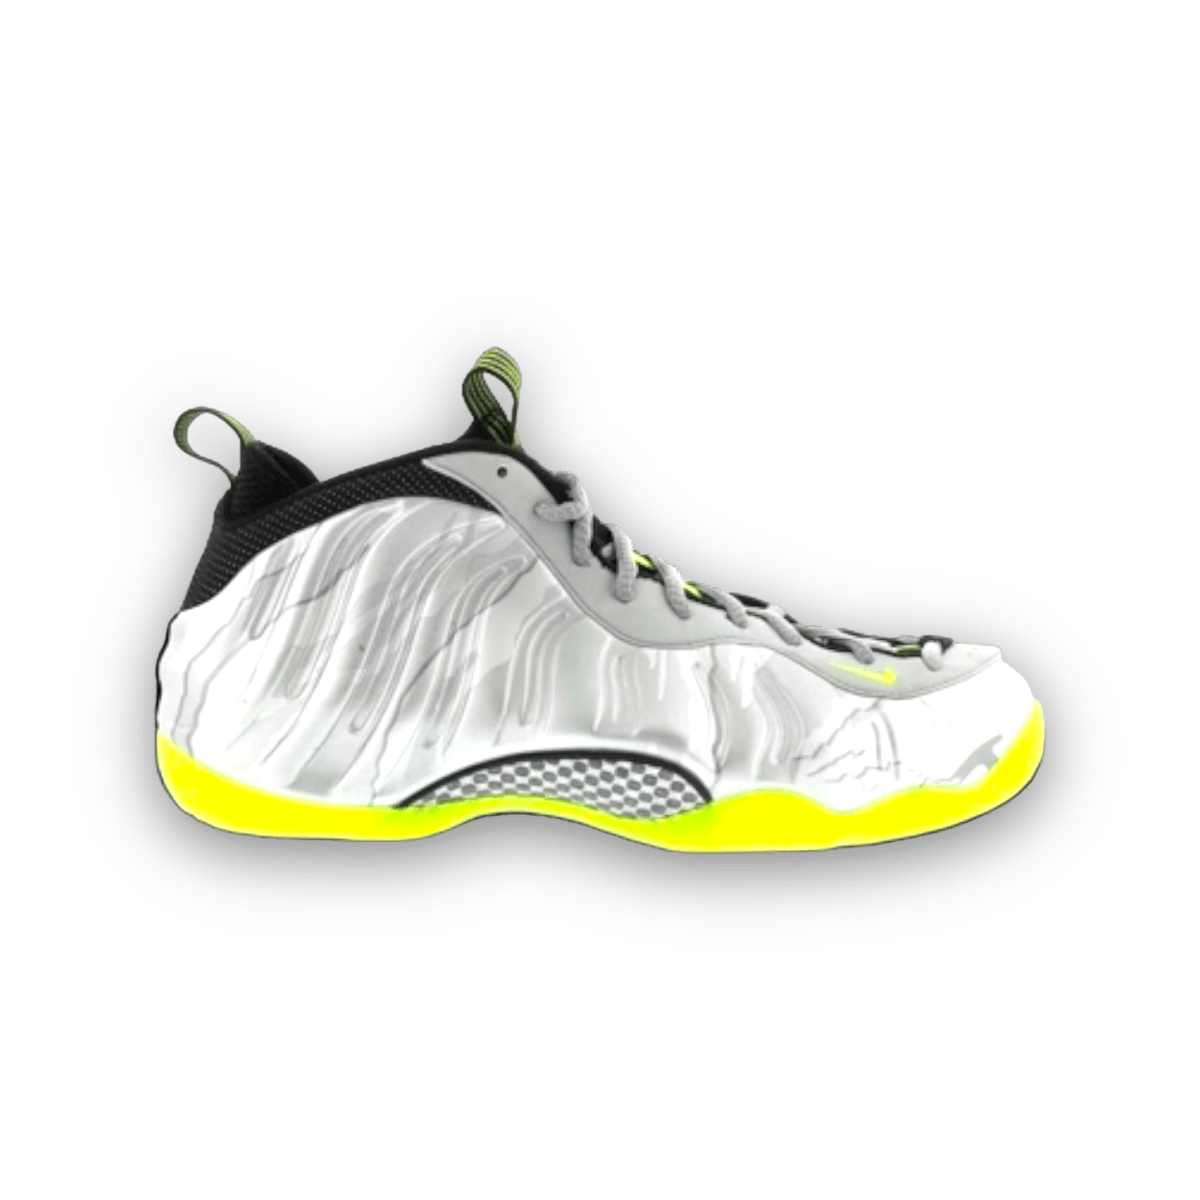 Air Foamposite One Prm Metallic Camo - Gently Enjoyed (Used) Men 11.5 - Mid Sneaker - Nike - Jawns on Fire